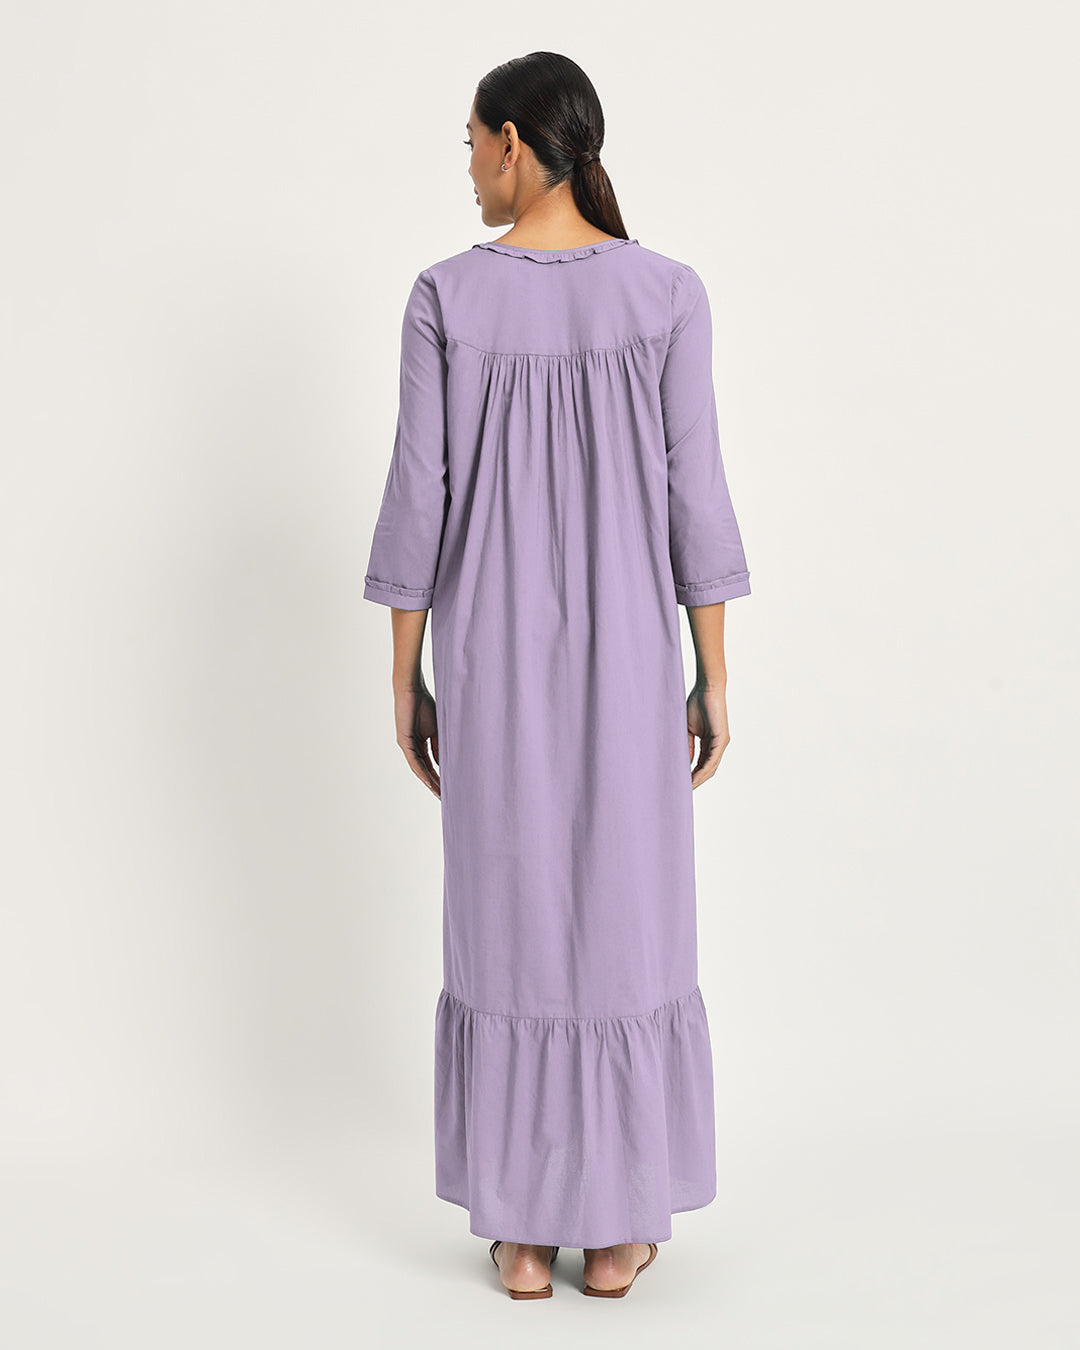 Combo: Lilac & Wisteria Purple 24-Hours Serenity Nightdress